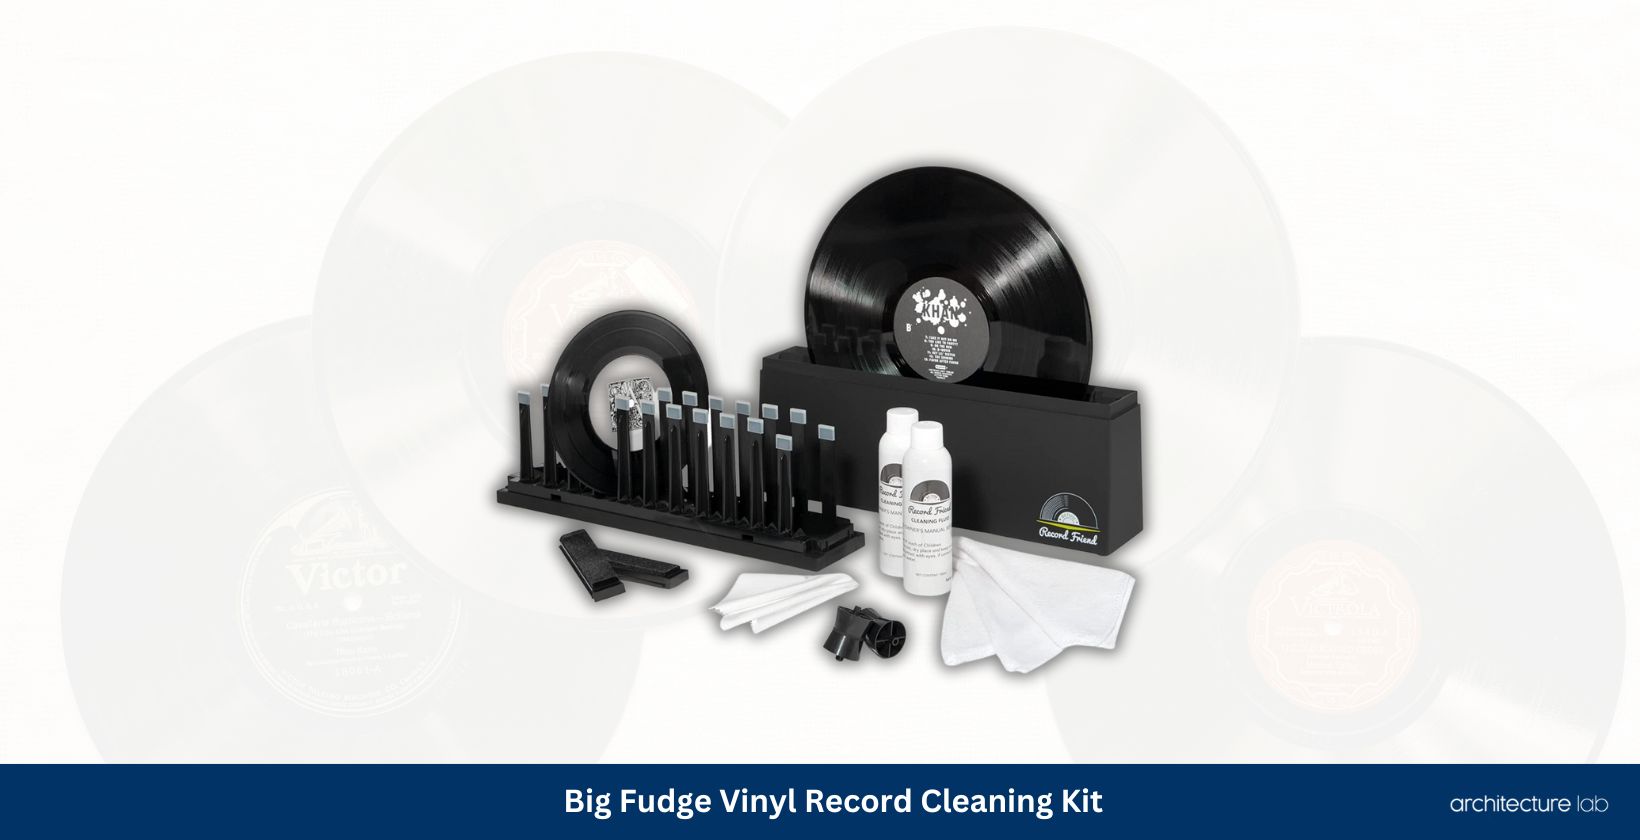 Big fudge vinyl record cleaning kit